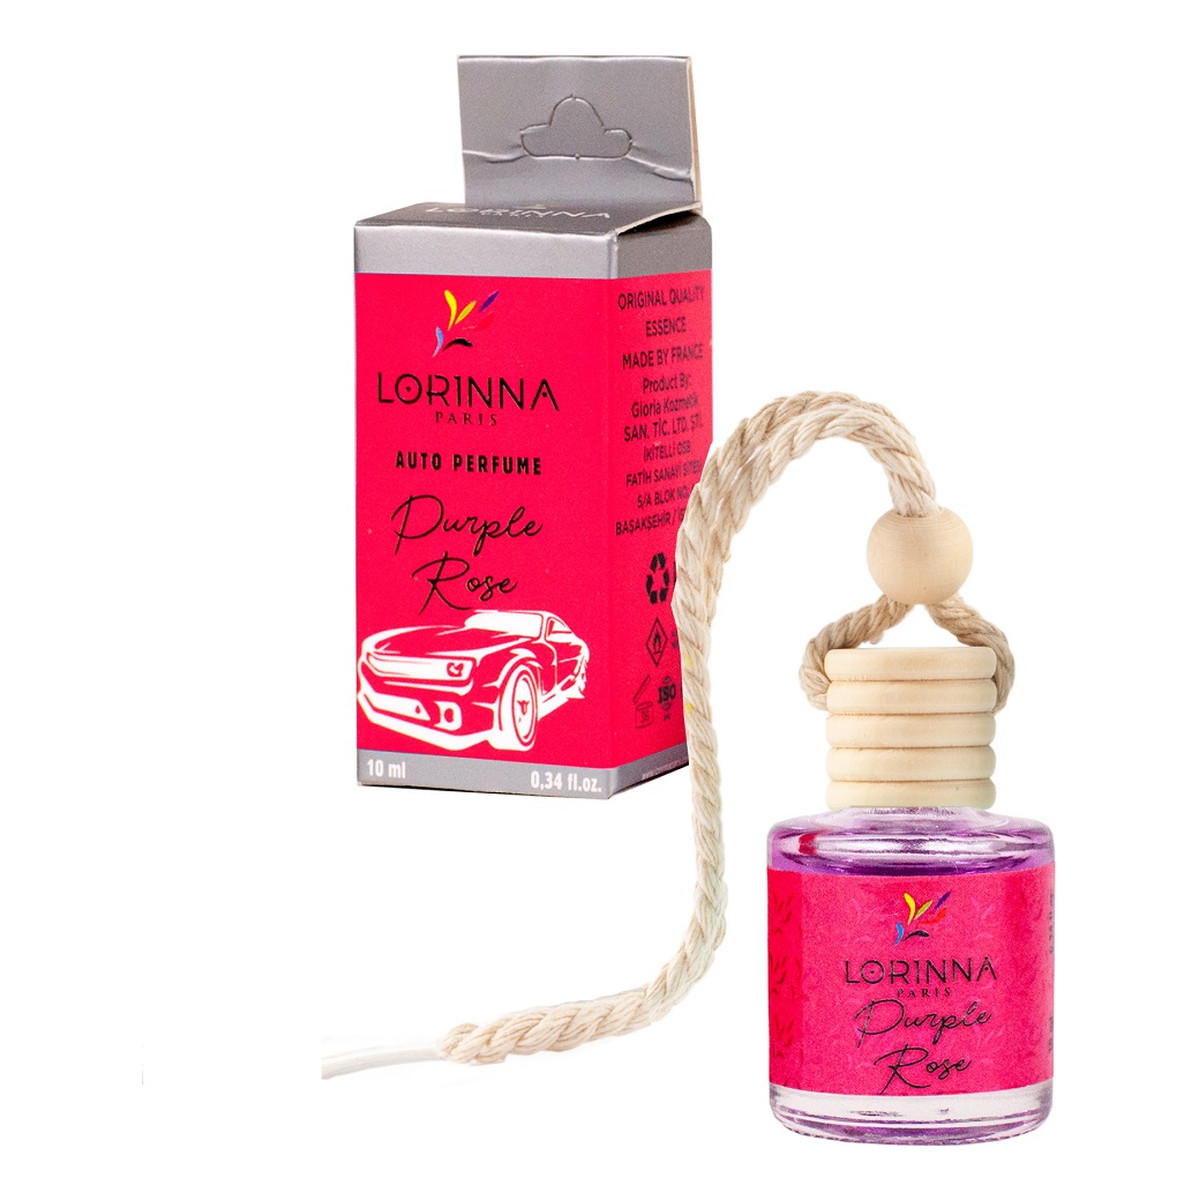 Lorinna Auto perfume zapach do samochodu purple rose 10ml